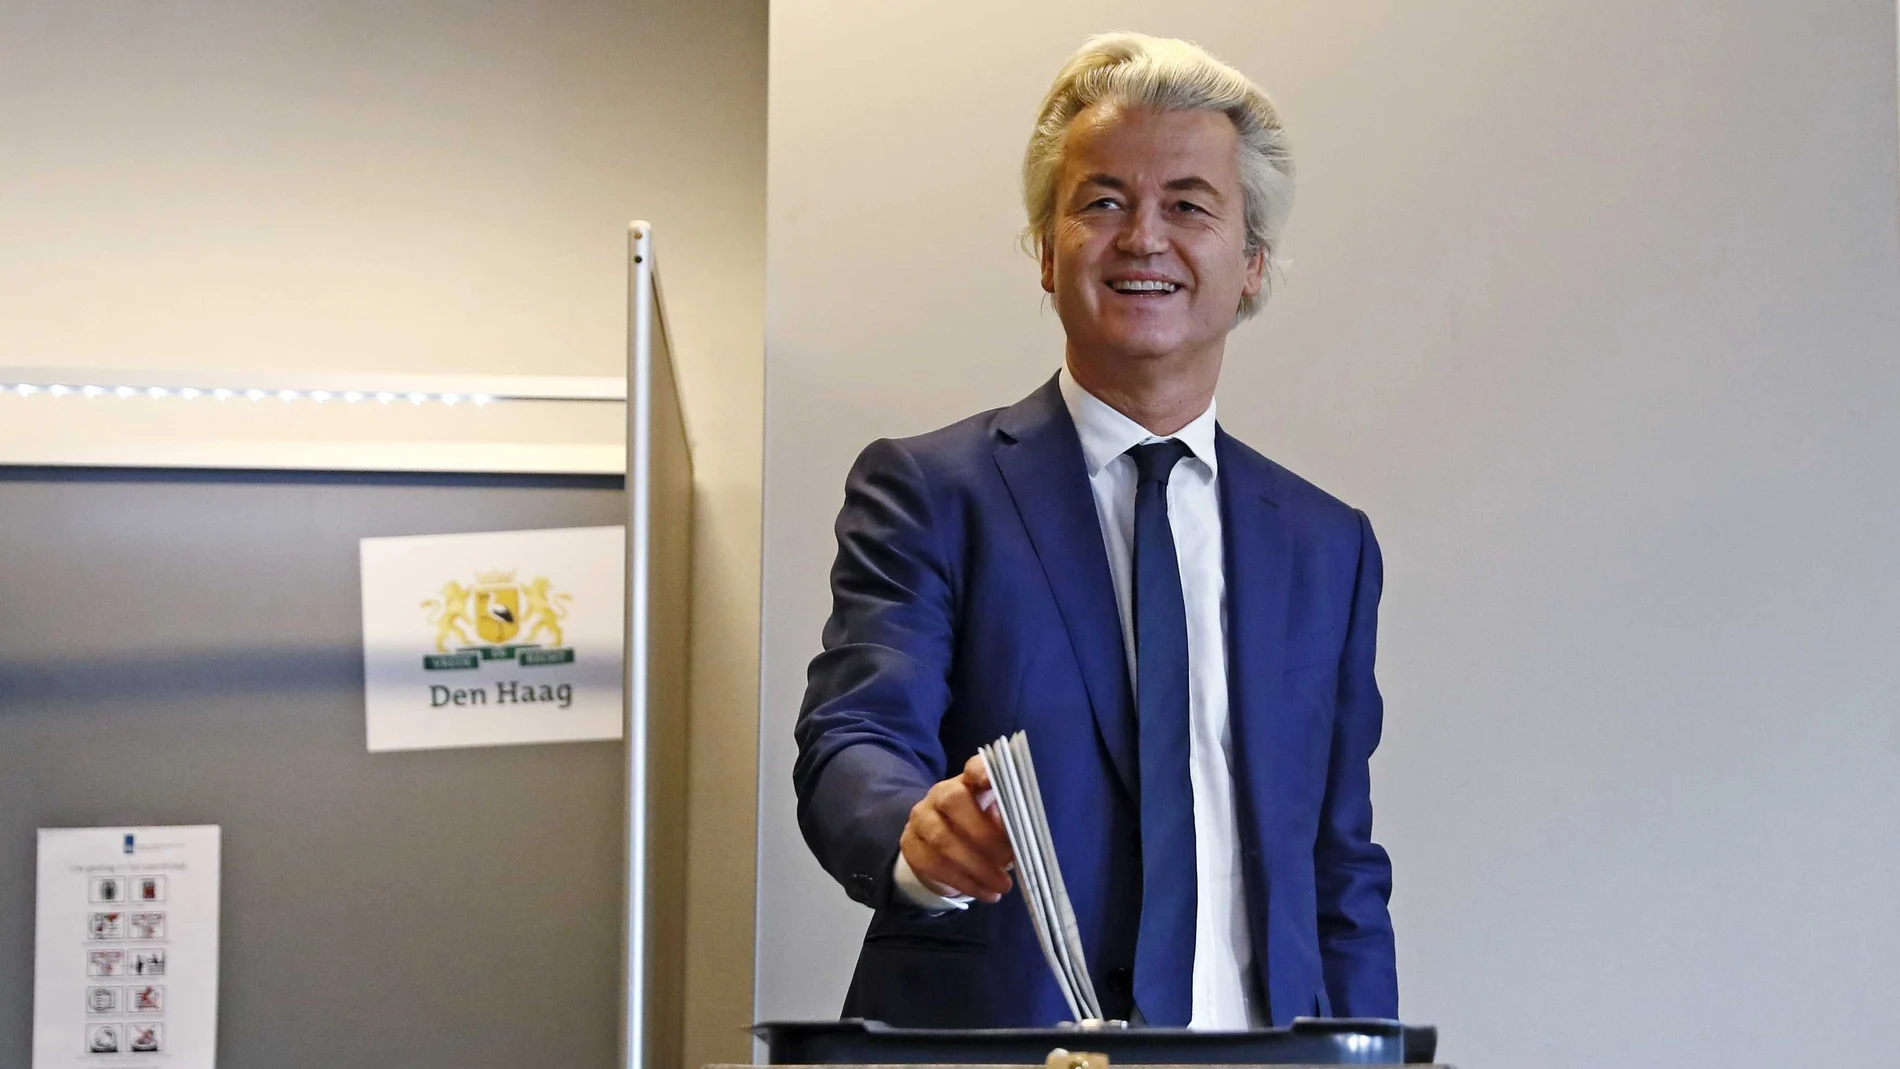 El líder del ultraderechista Partido de la Libertad, Geert Wilders